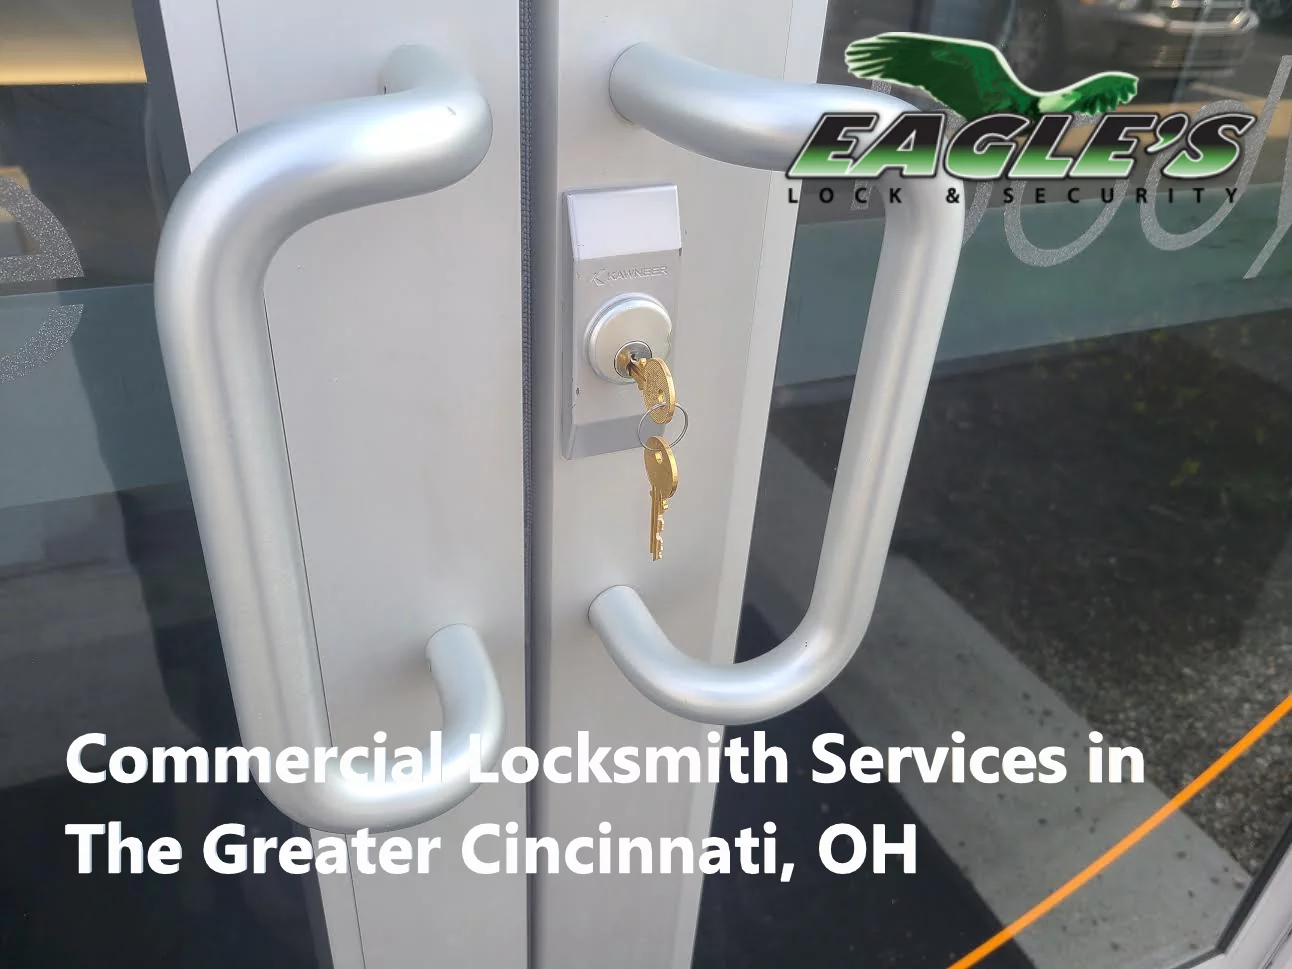 Cincinnati Commercial Locksmith Services Near Me